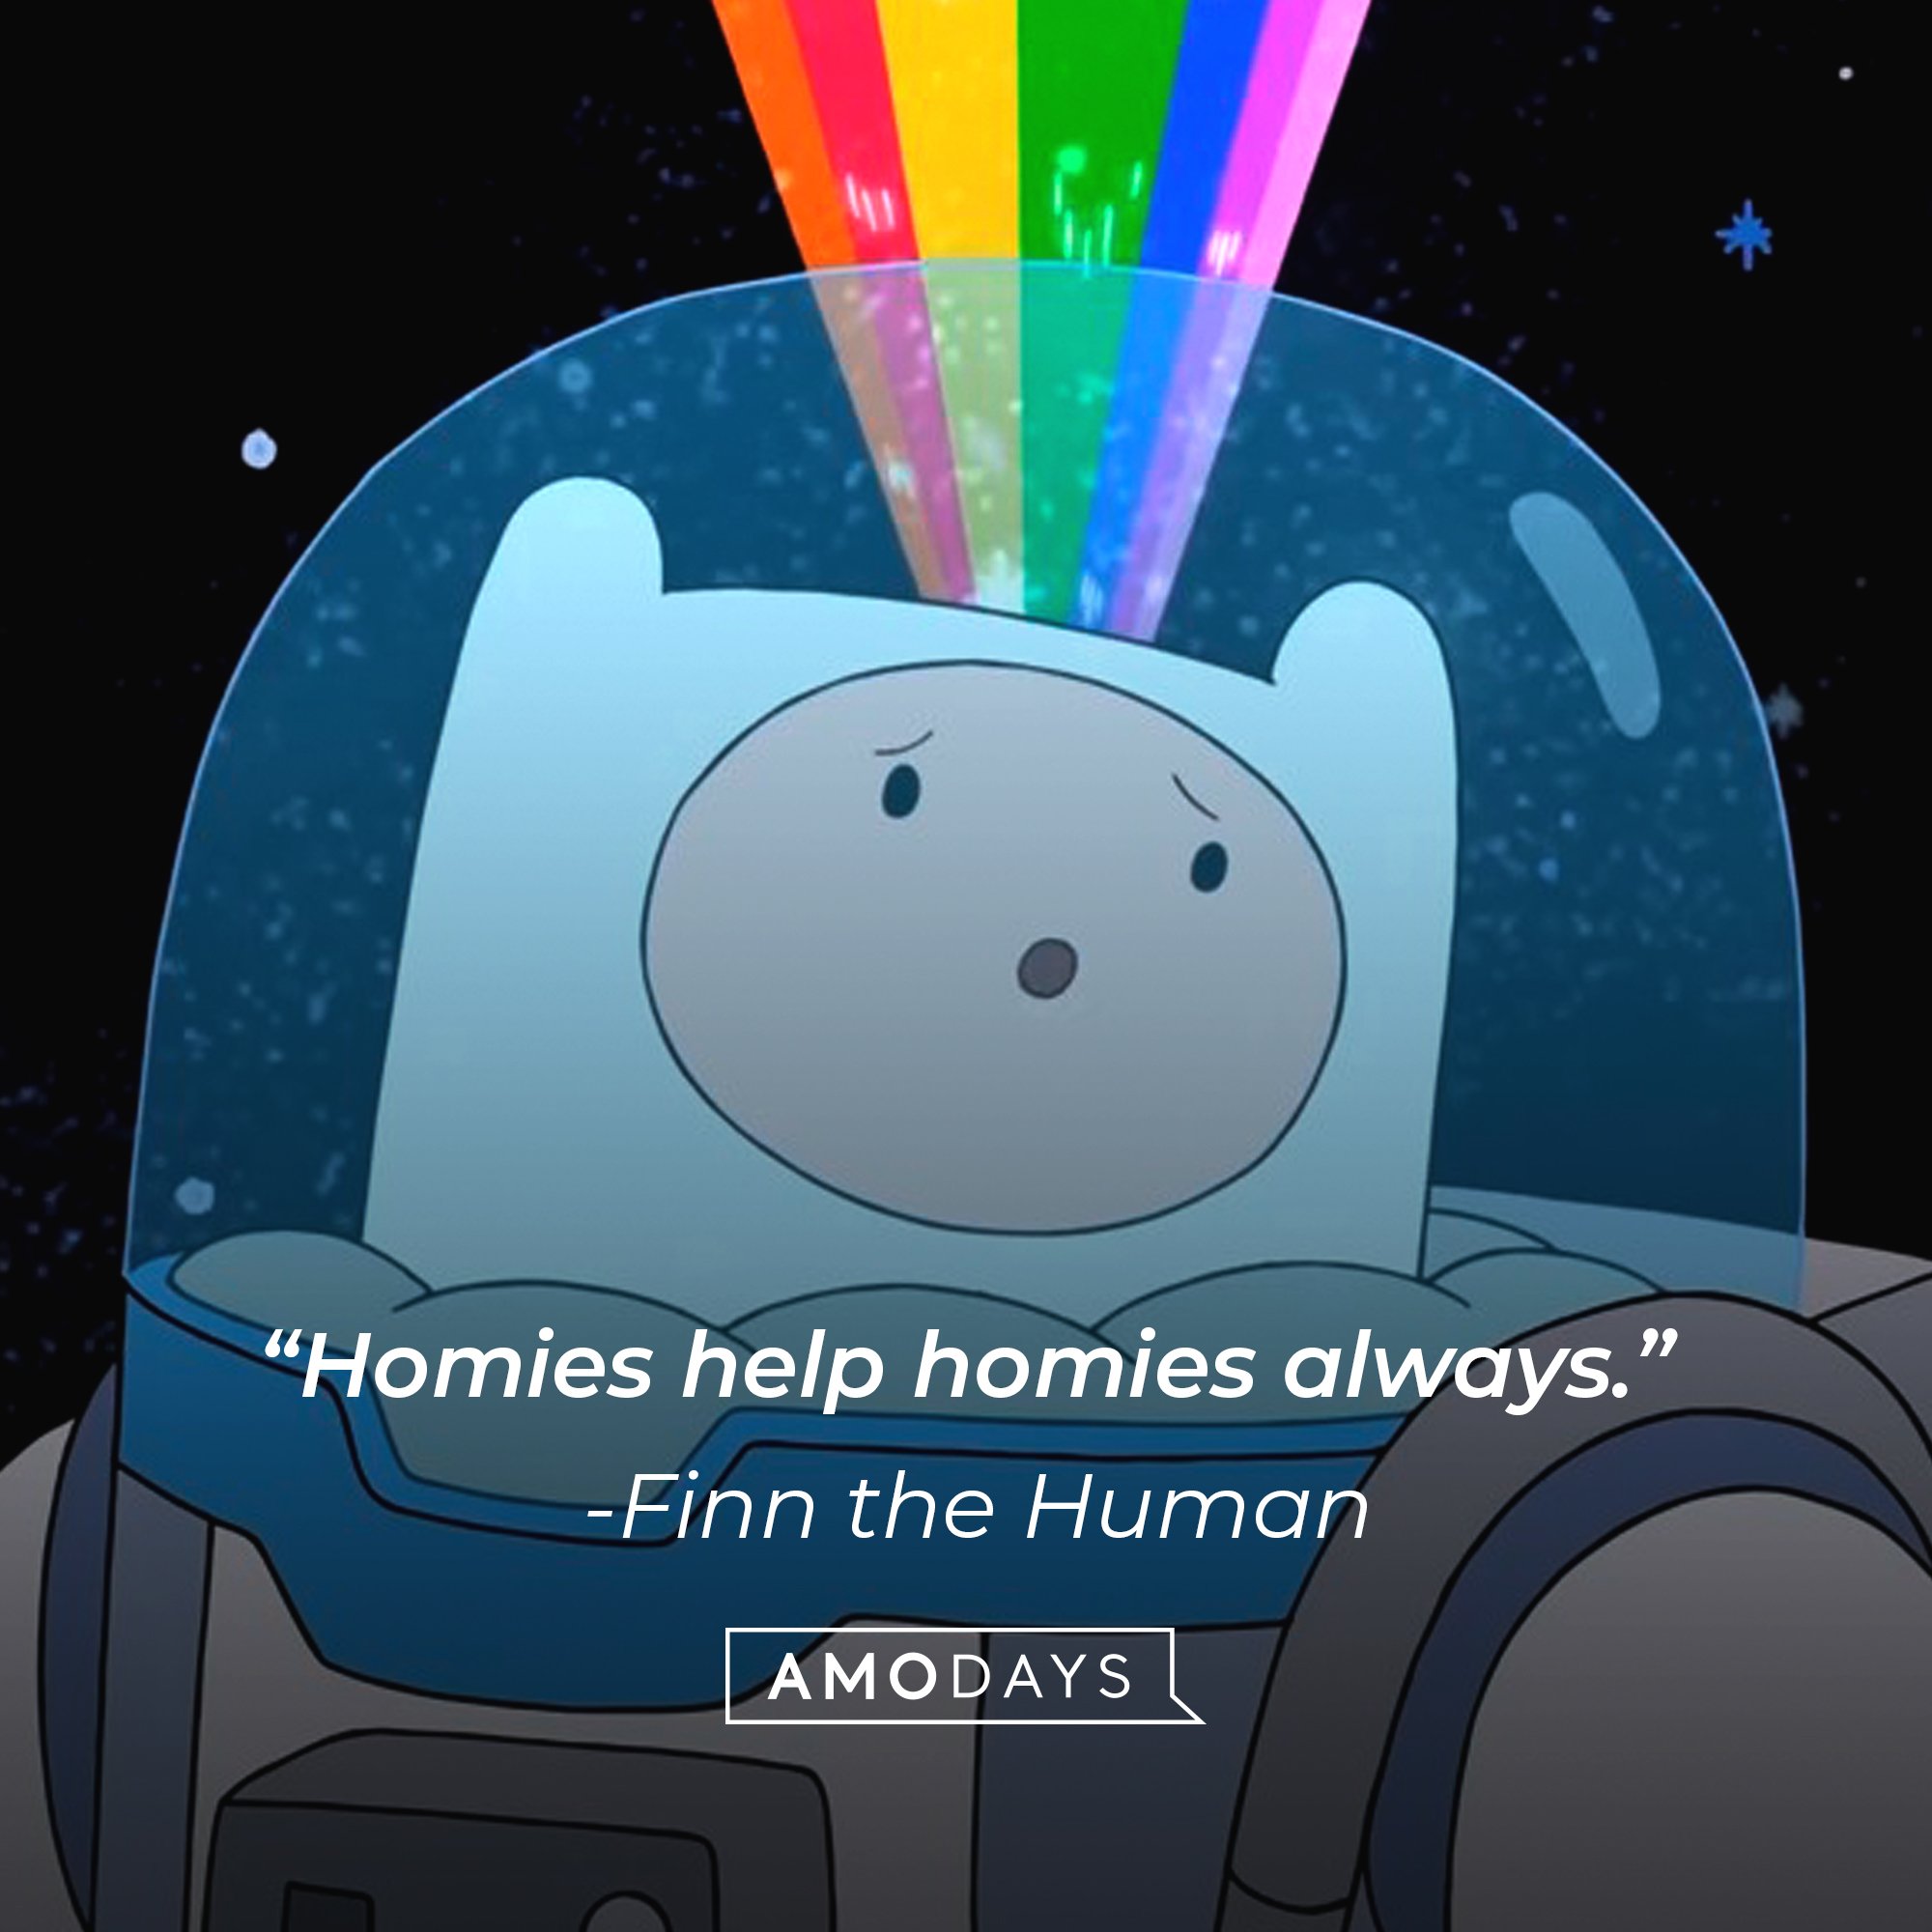  Finn the Human’s quote: “Homies help homies always.” | Image: AmoDays